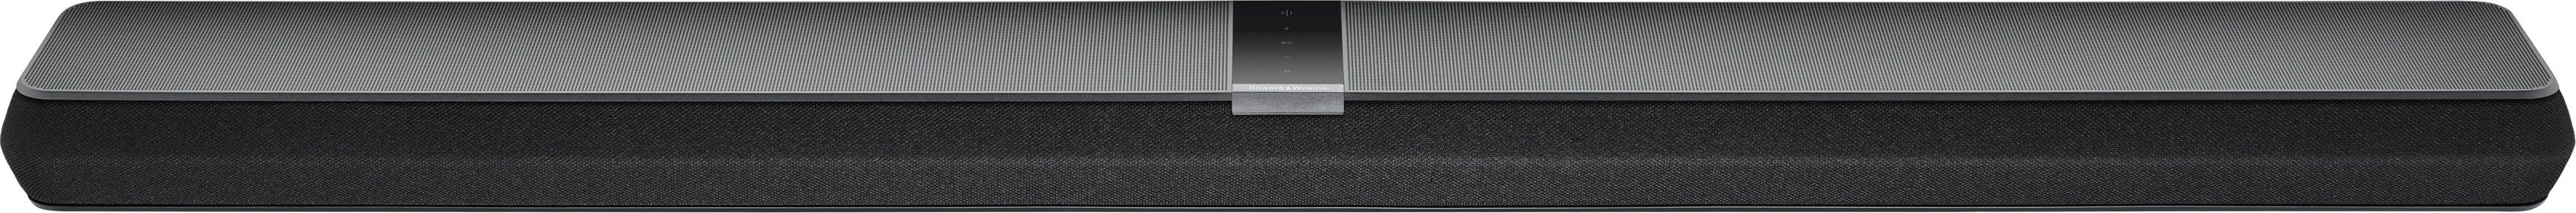 Bowers & Wilkins Panorama Bluetooth, (aptX 2) Dolby 400 Atmos, Airplay Wireless Soundbar 3 W, 3.1.2